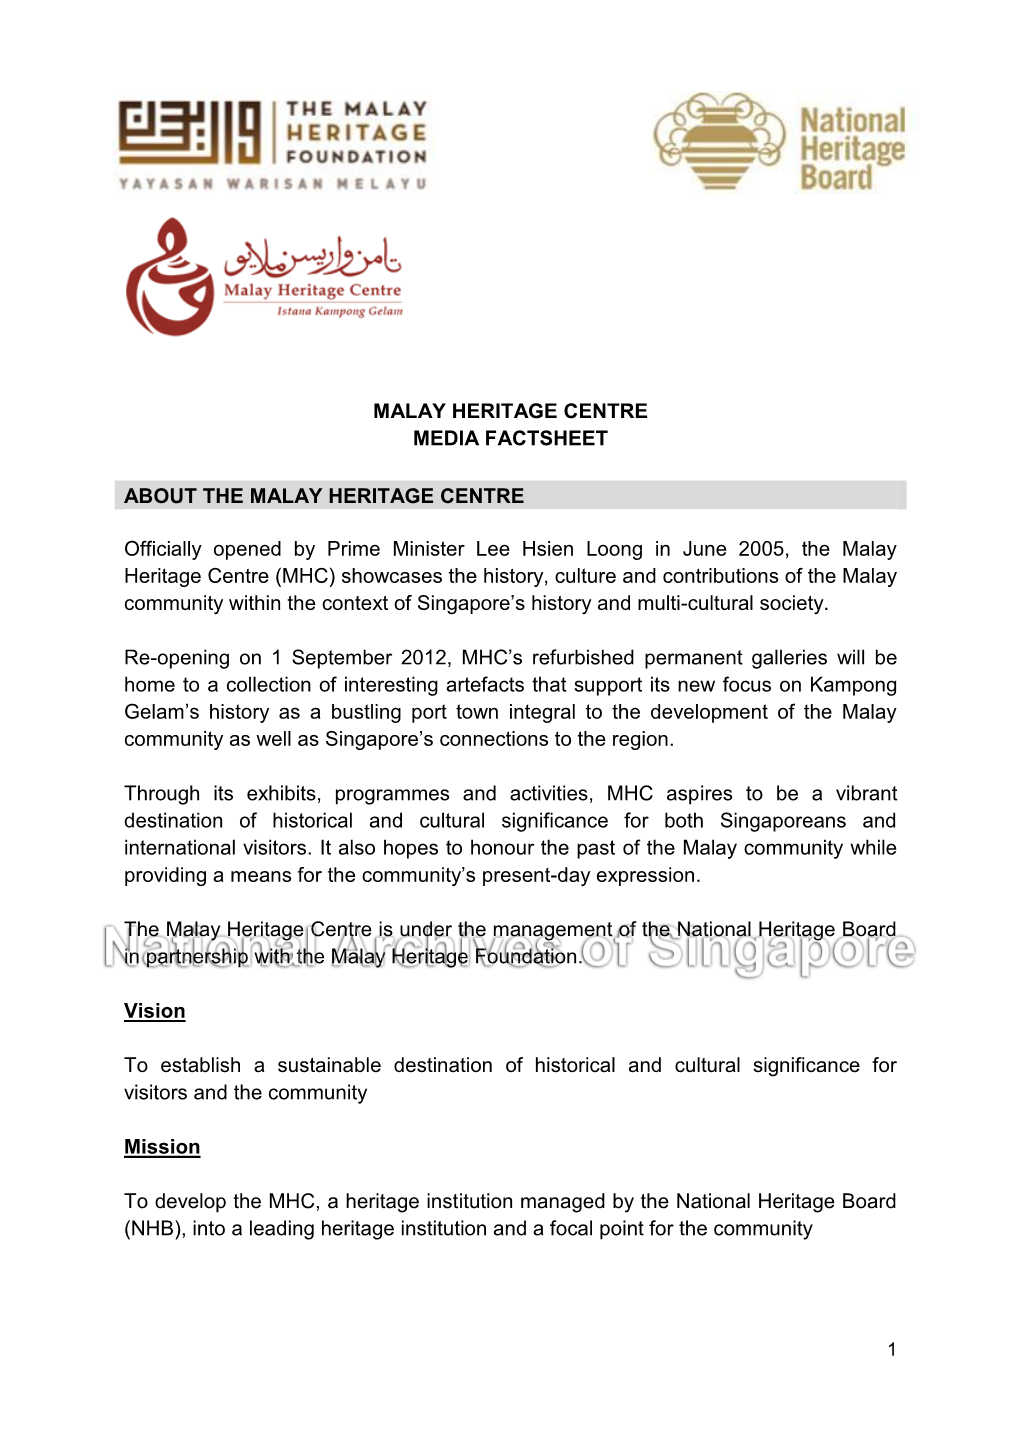 Malay Heritage Centre Media Factsheet